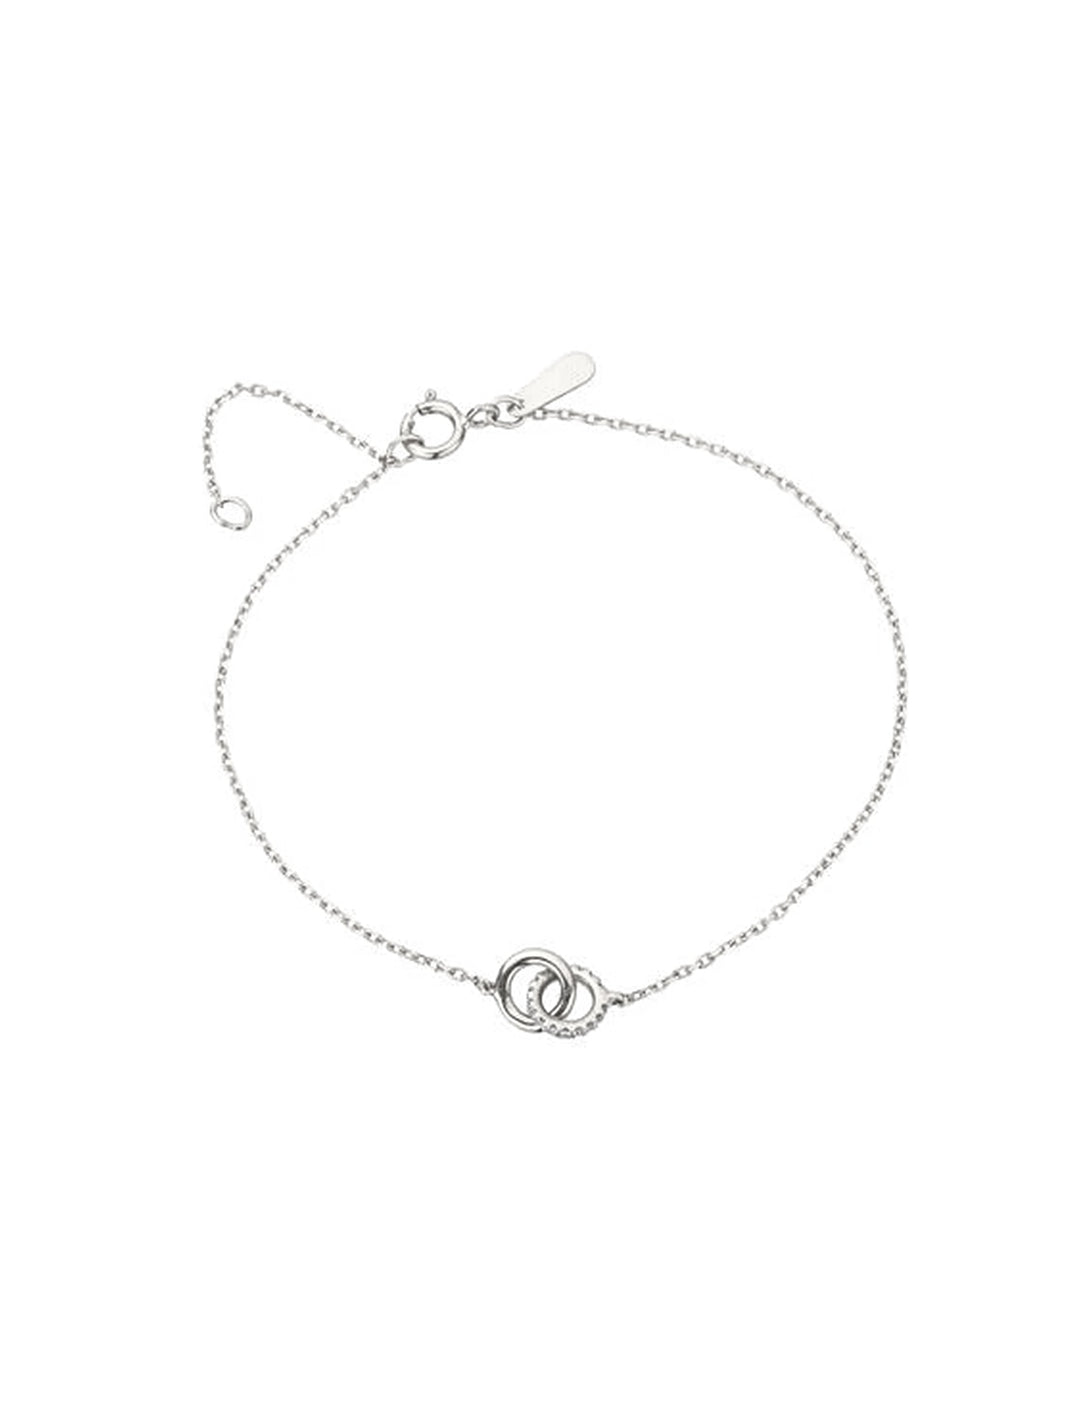 Overhead view of Adina Reyter's pave interlocking loop bracelet in silver.